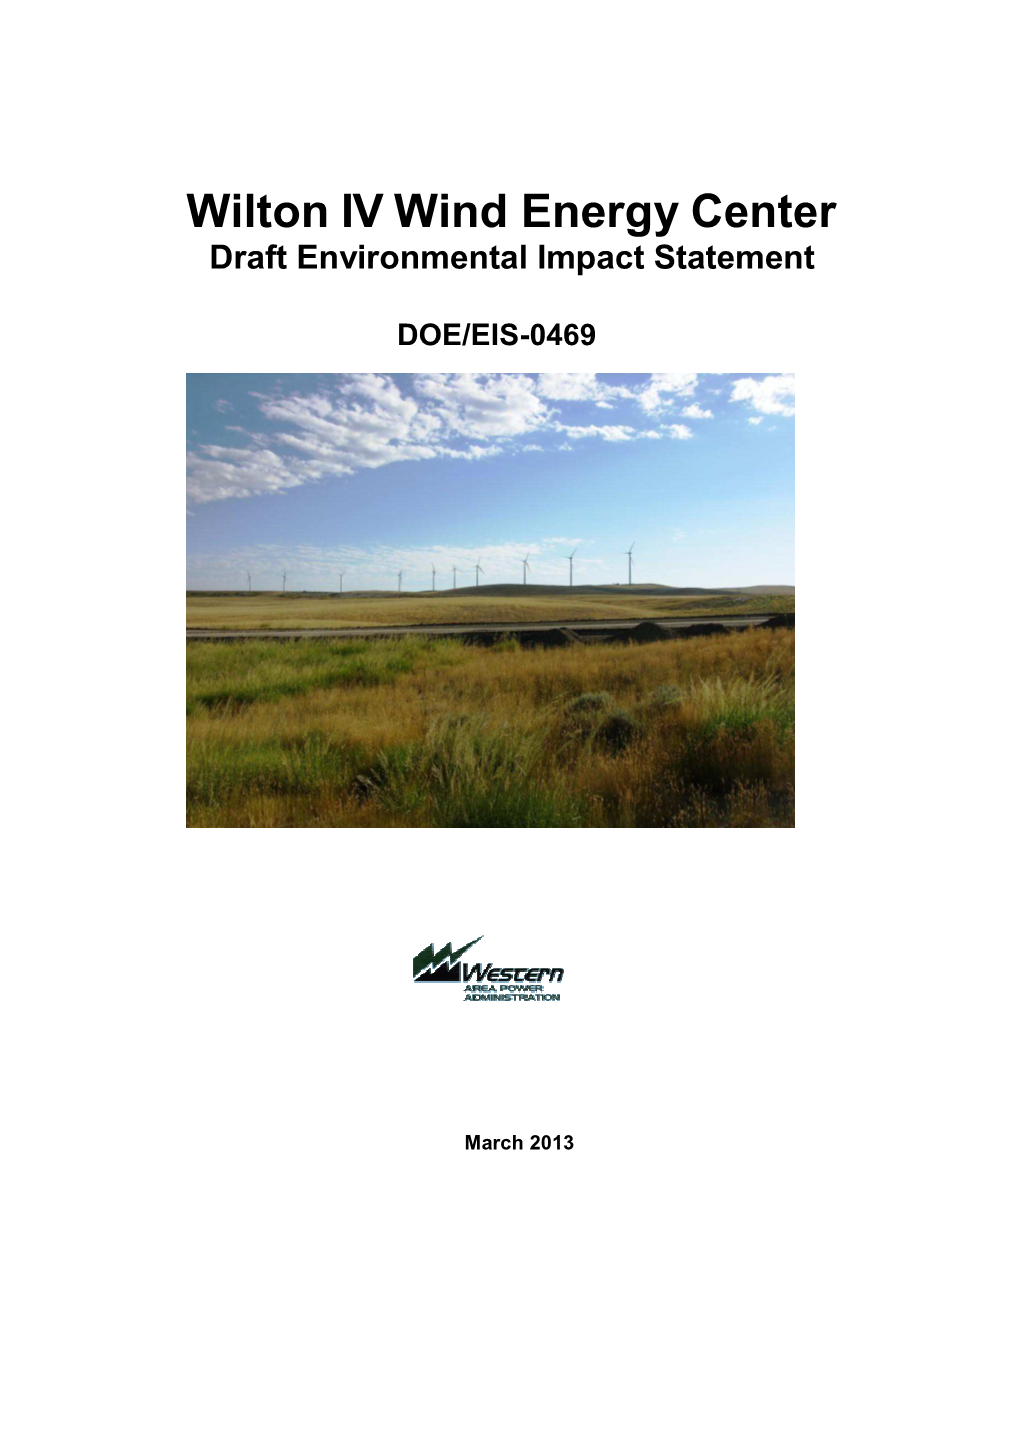 Wilton IV Wind Energy Center Draft Environmental Impact Statement